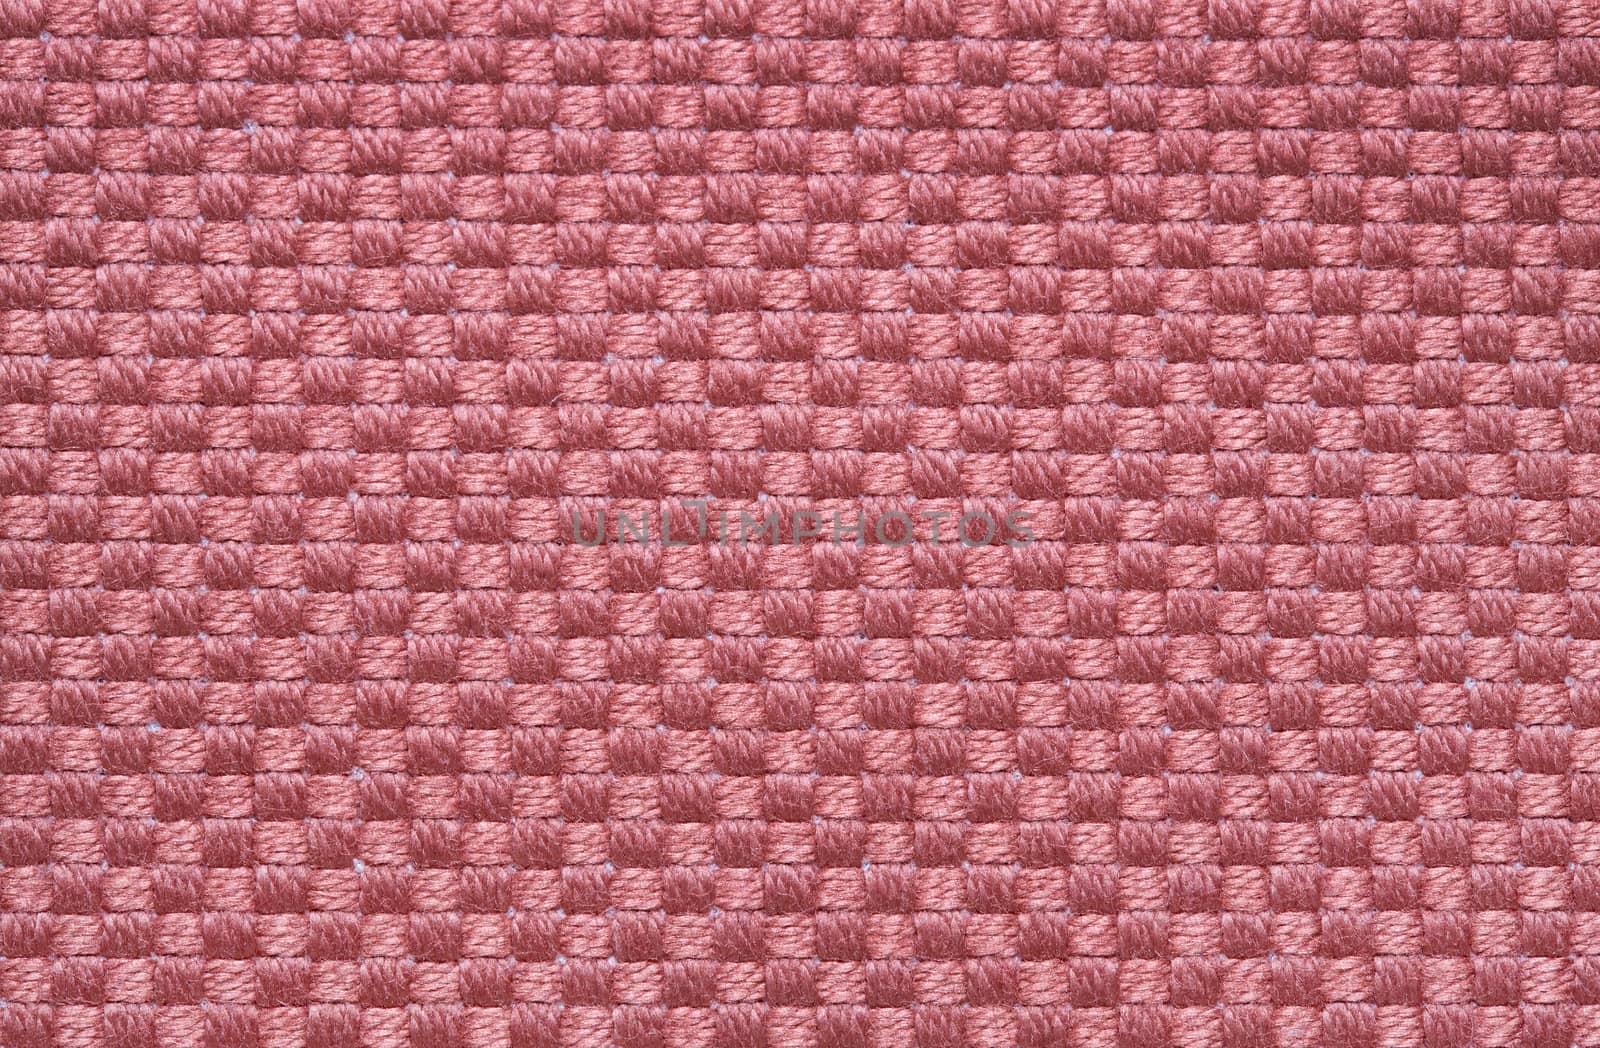 Macro shot of a wattled rope wallpaper